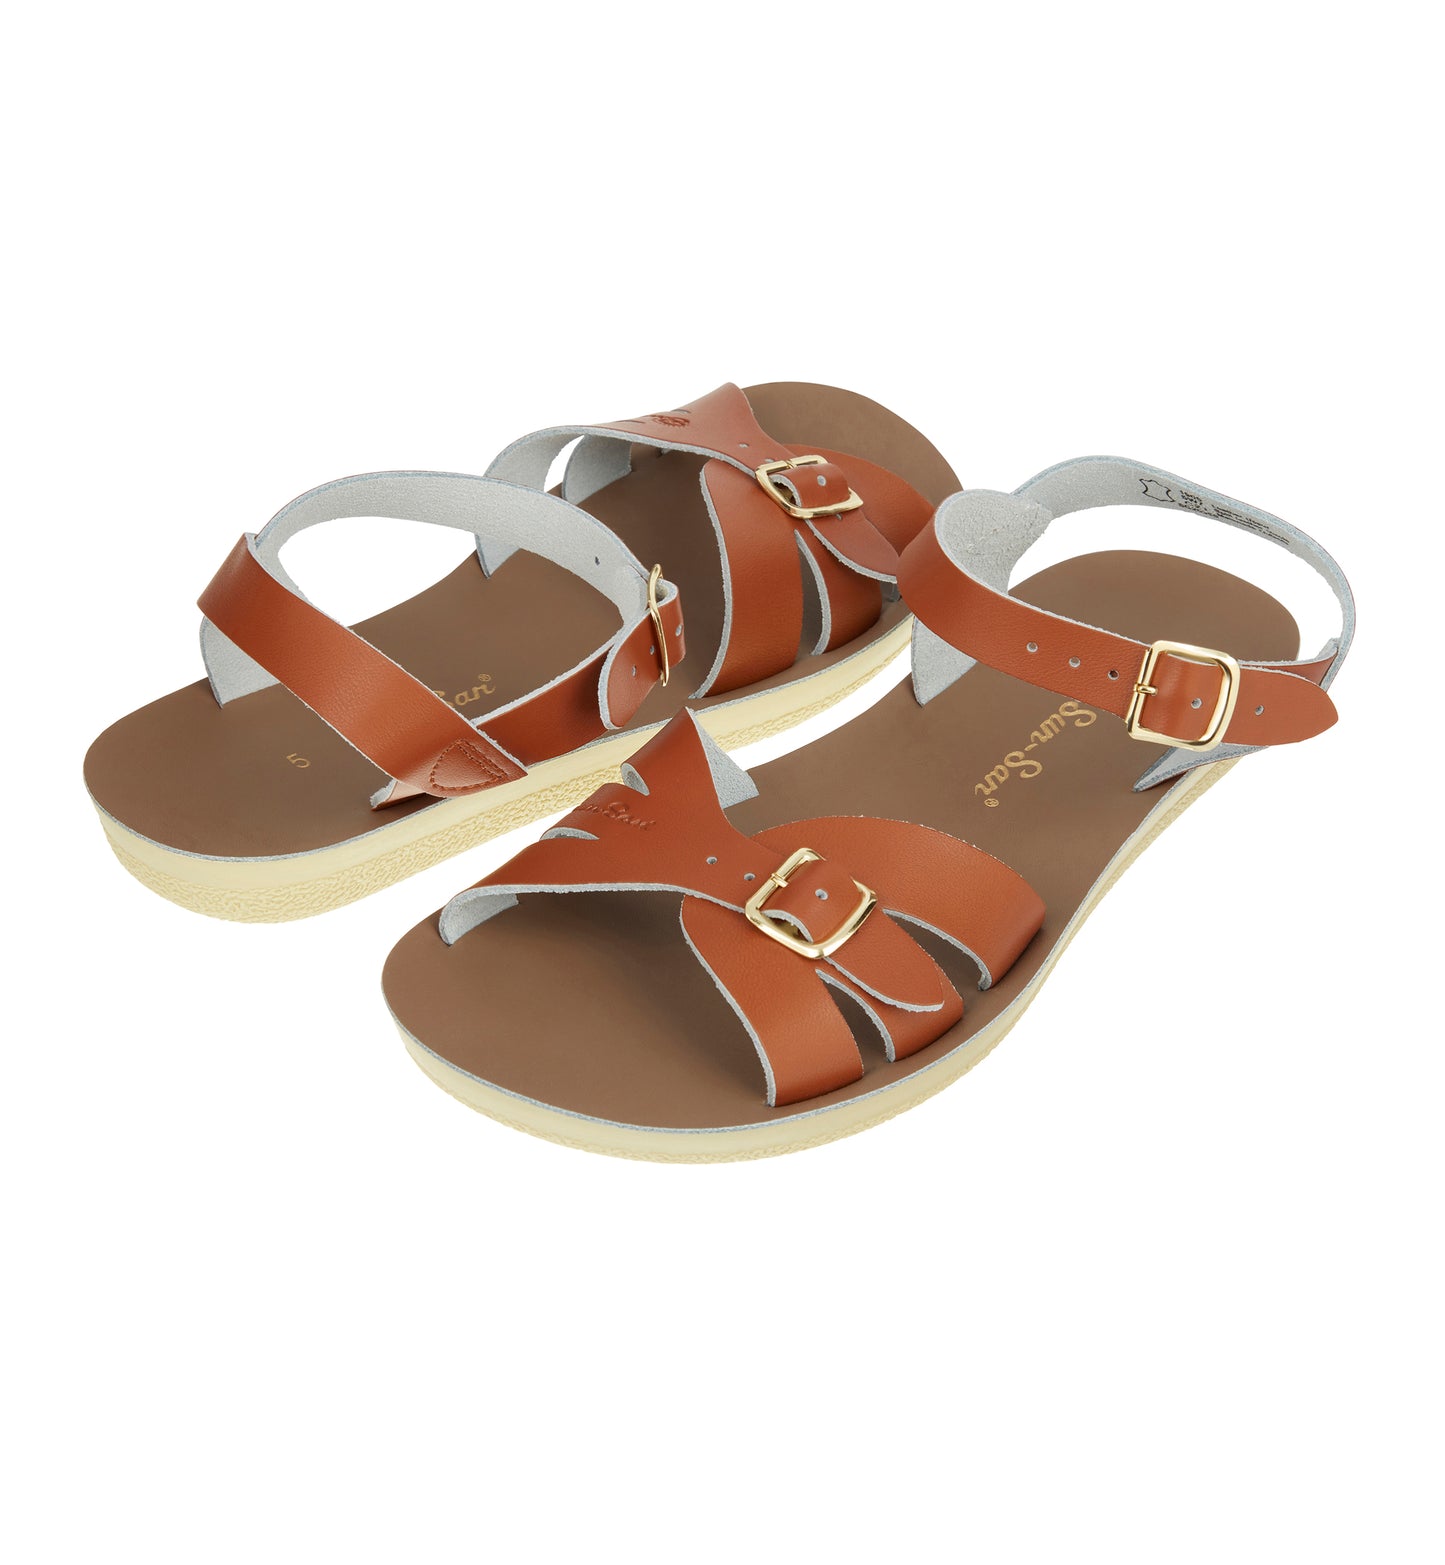 Boardwalk Adult Tan Sandal